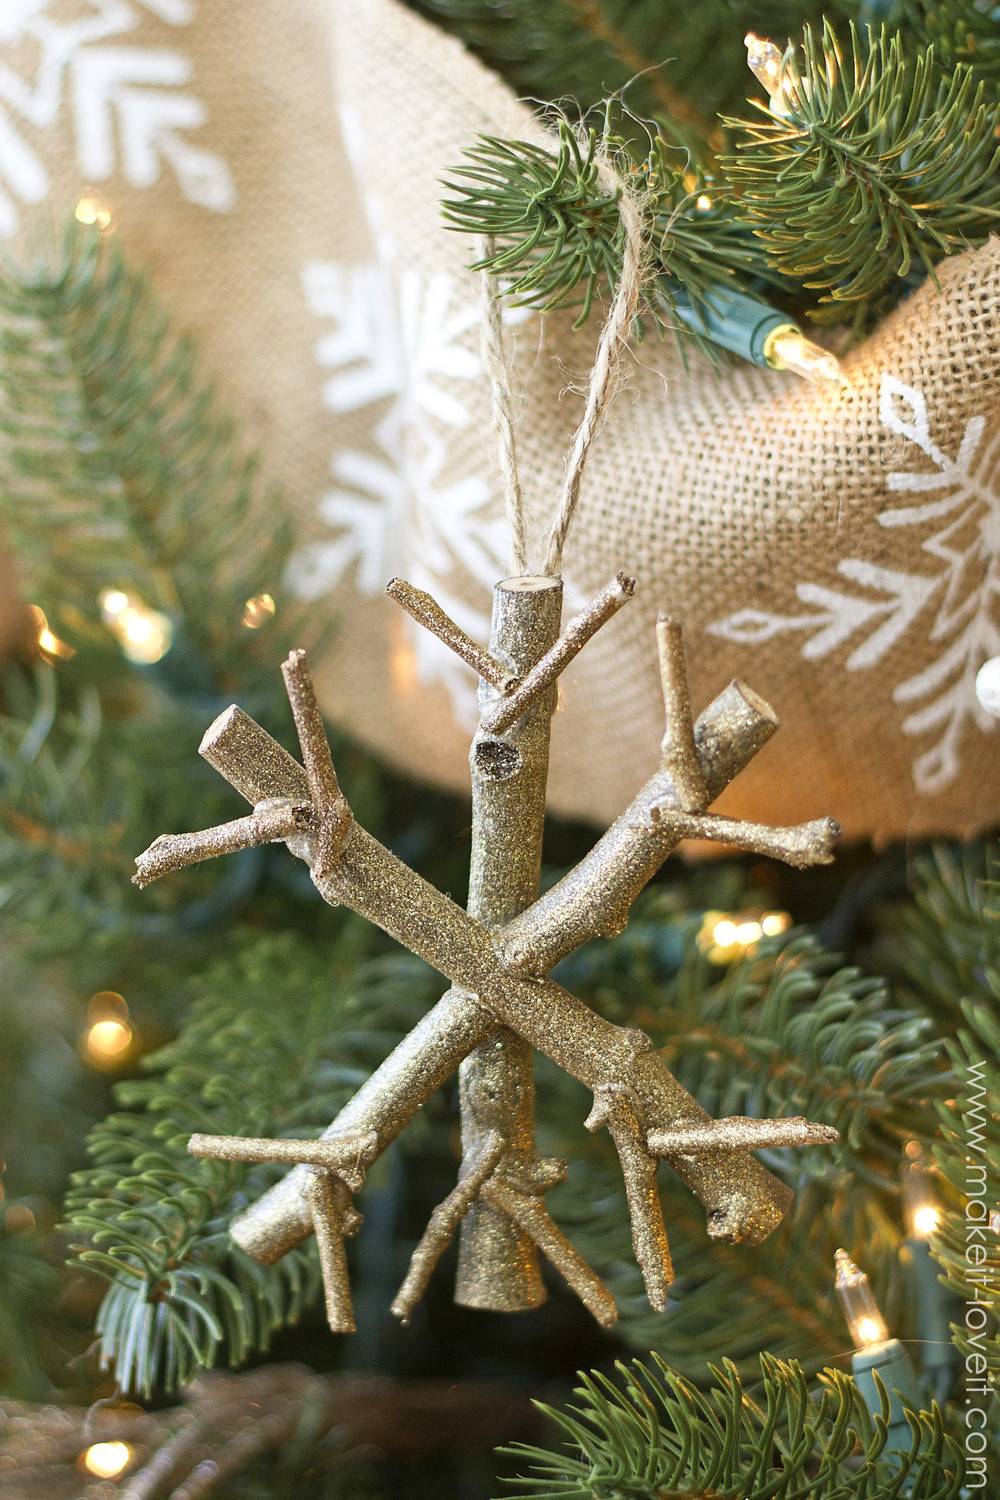 DIY Christmas Tree Ornaments
 23 Cool DIY Christmas Tree Decorations To Make With Kids